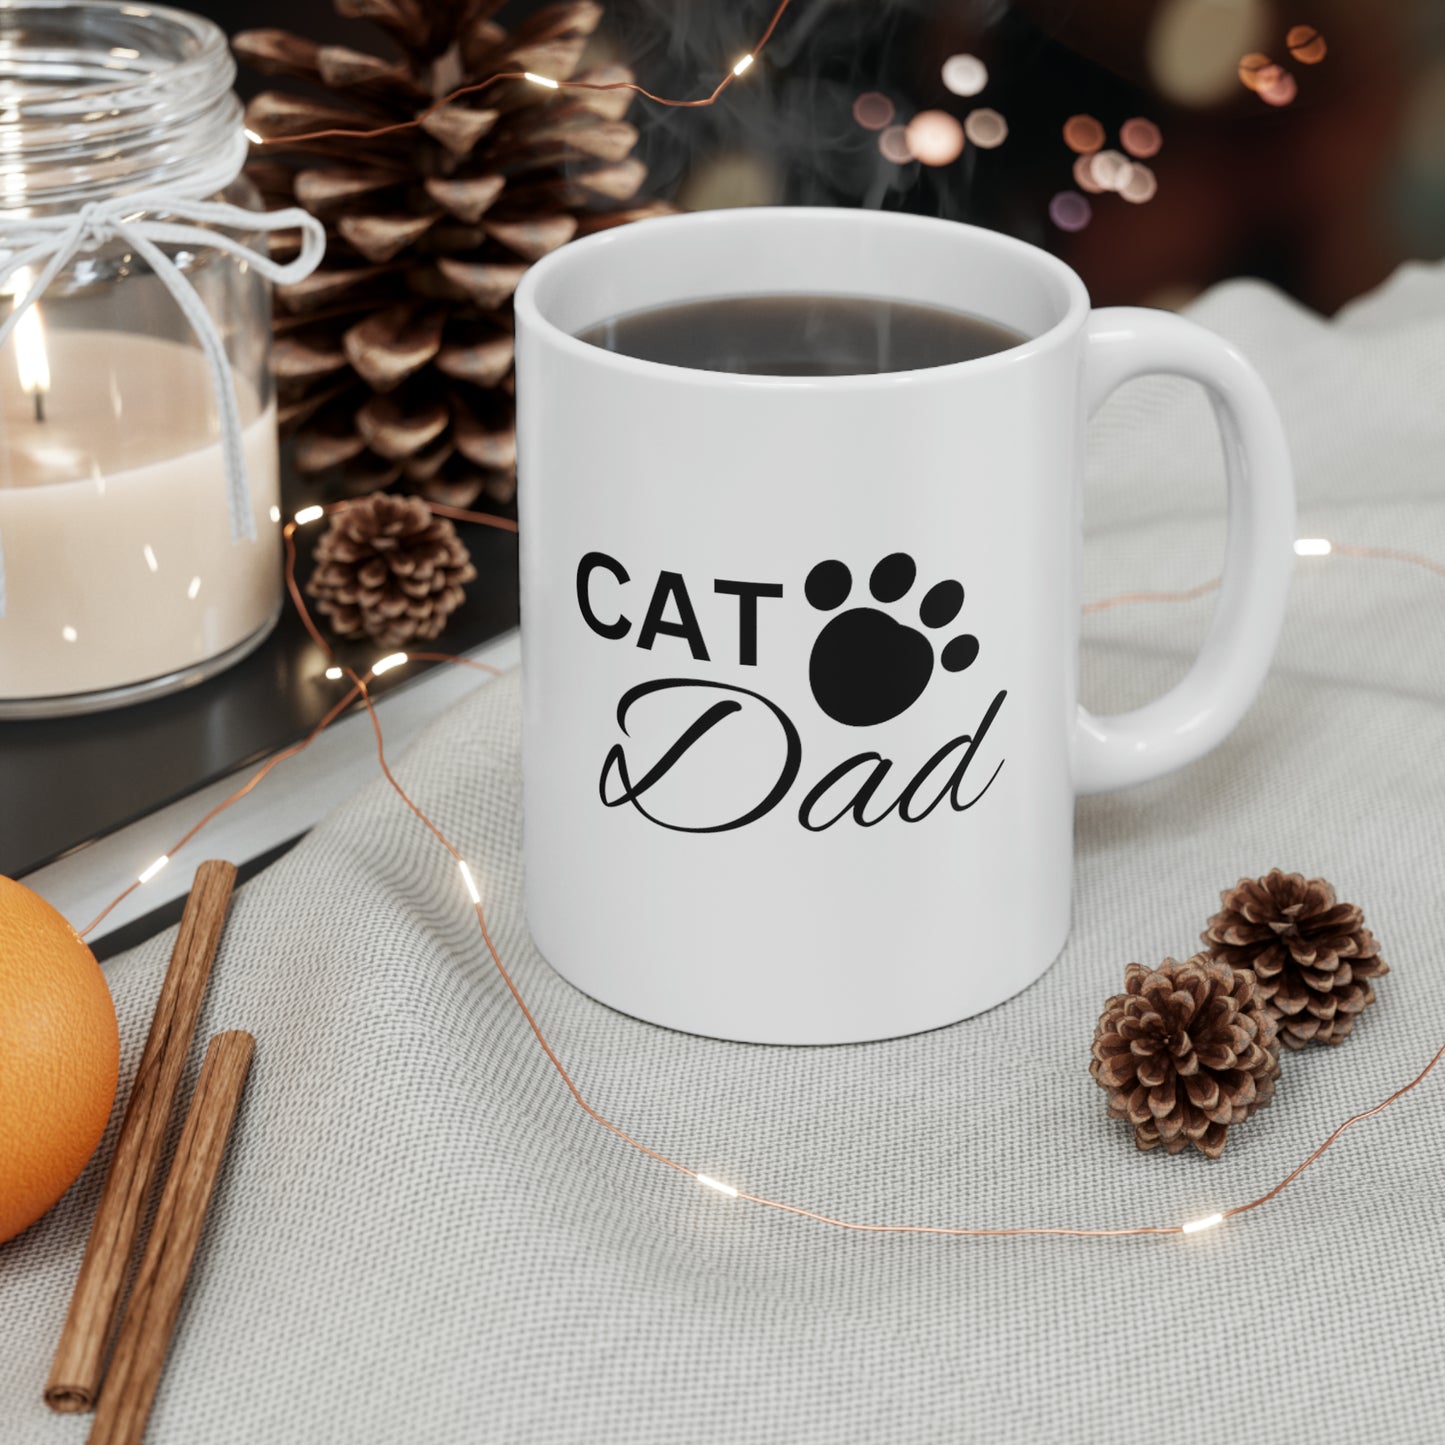 Cat Dad Ceramic Mug, 11oz